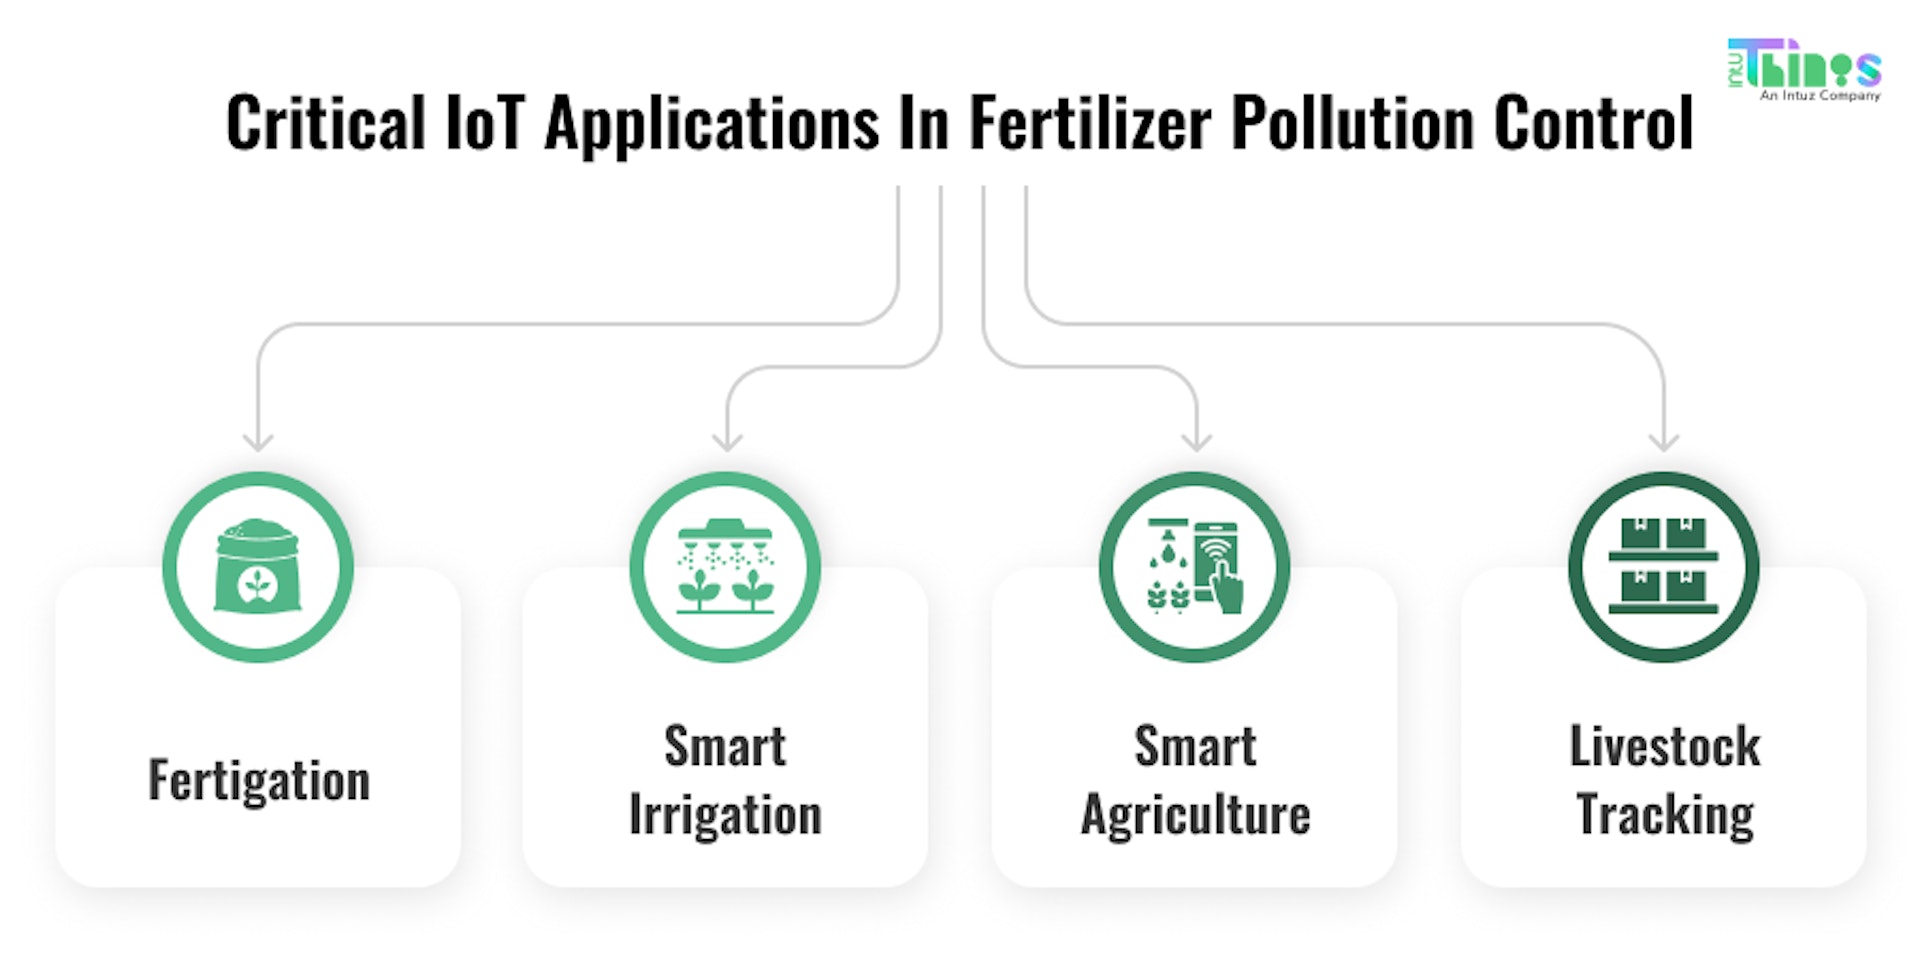 IoT applications in fertilizer pollution control